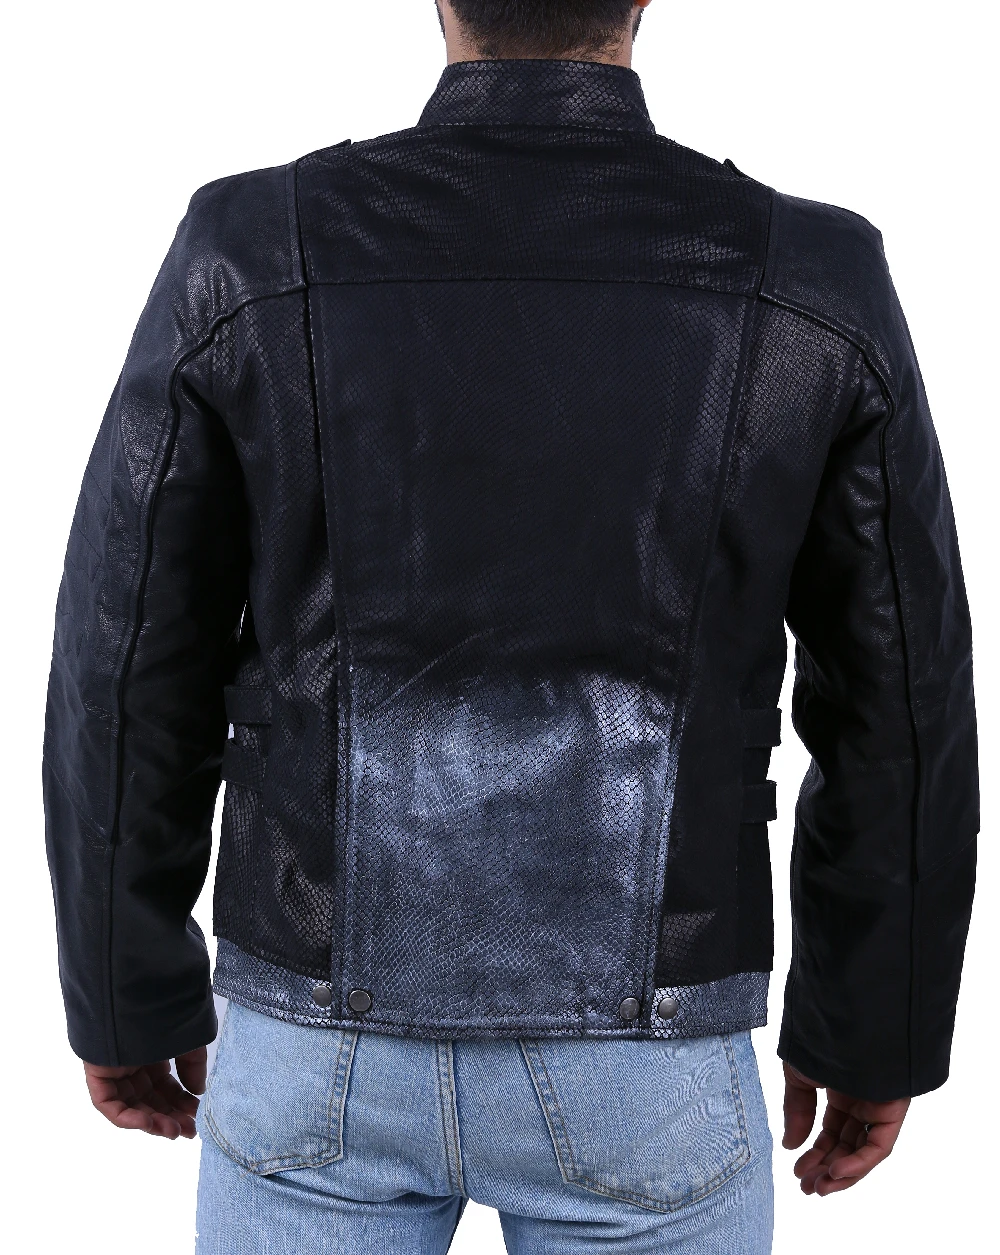 Buy Galaxy Black Leather Jacket